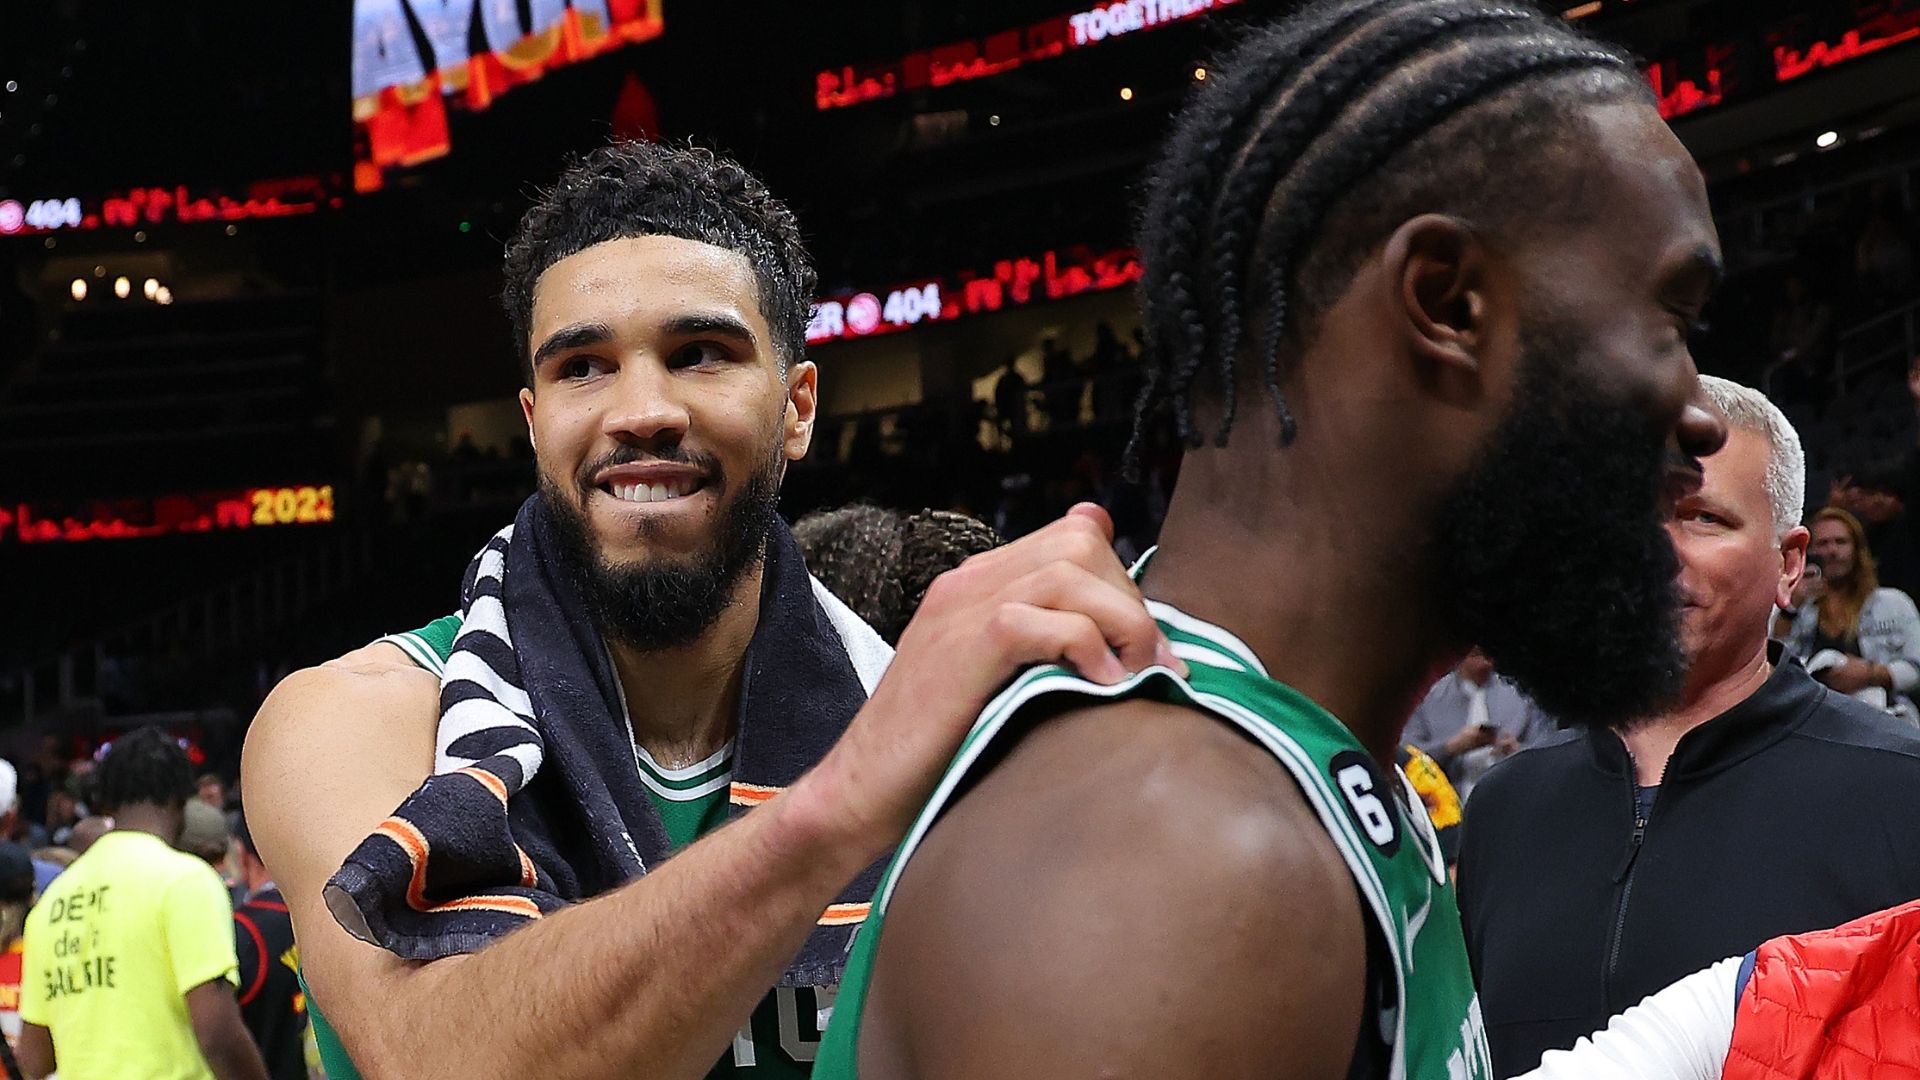 Miami Heat elimina Boston Celtics, vence 7º jogo e avança para a